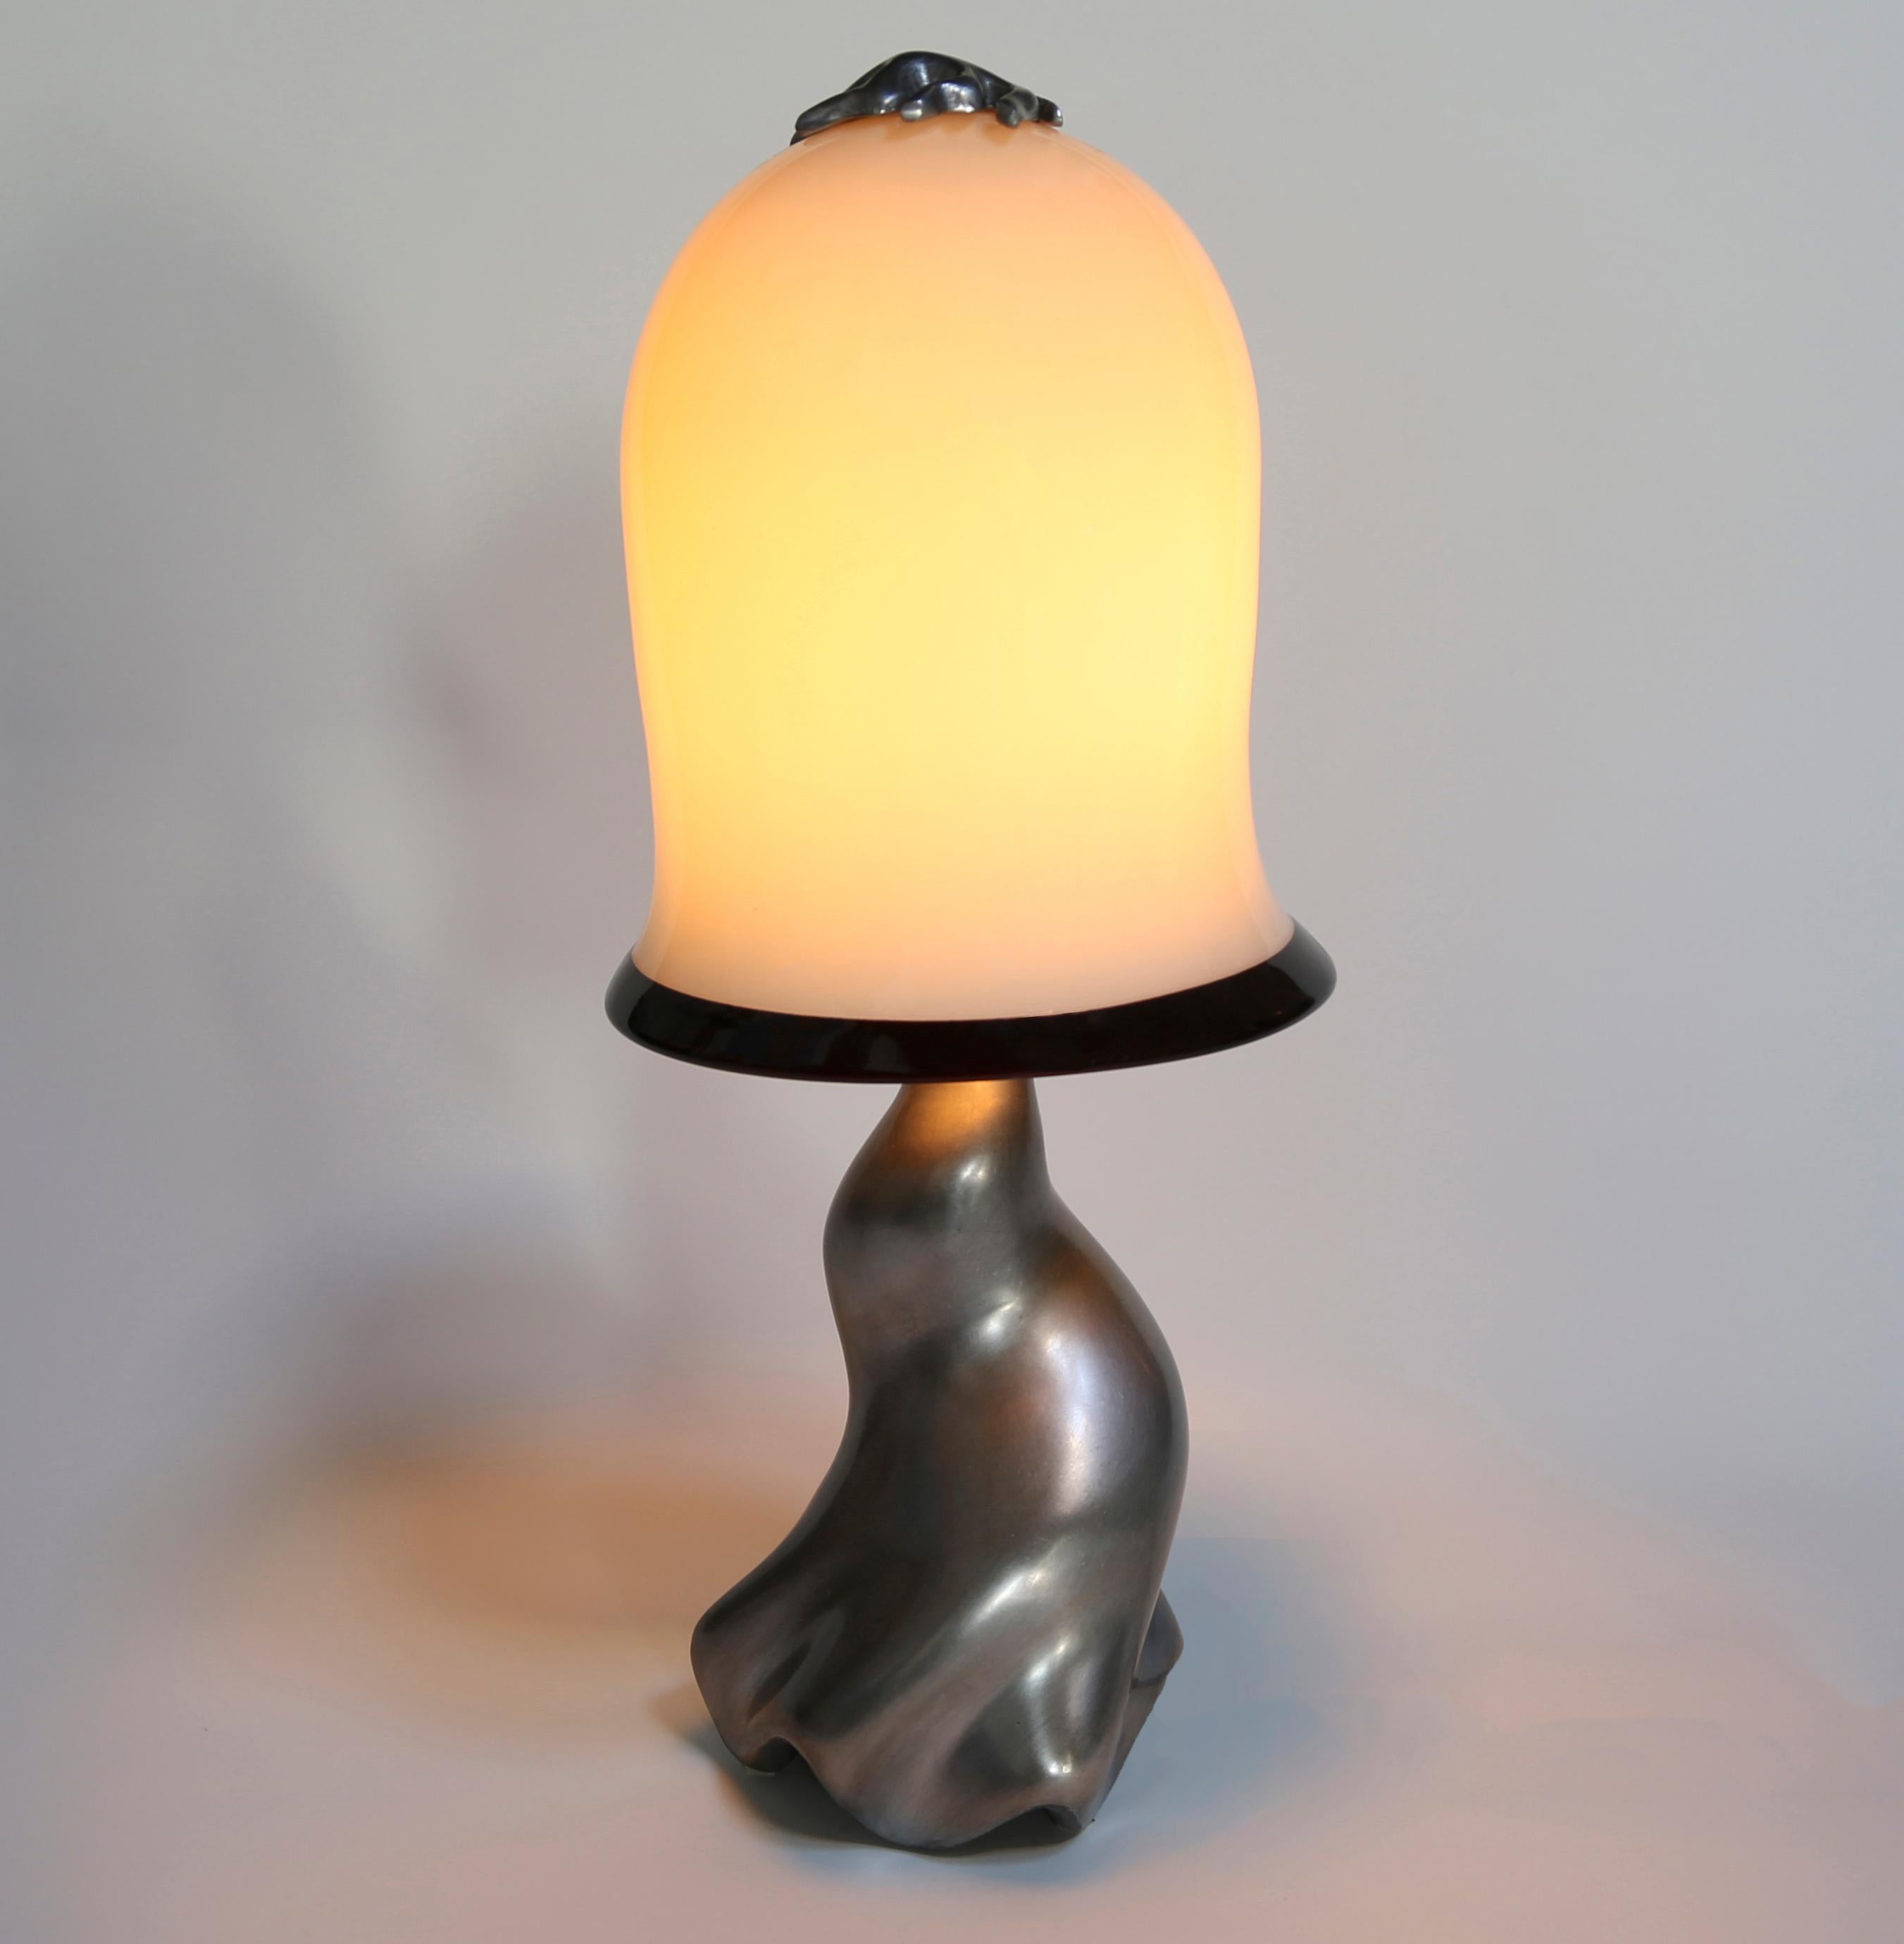 Patinated Swirl Table Lamp, Cast Magnesium Alu & Blown Glass, Jordan Mozer, Usa, 1997/2019 For Sale